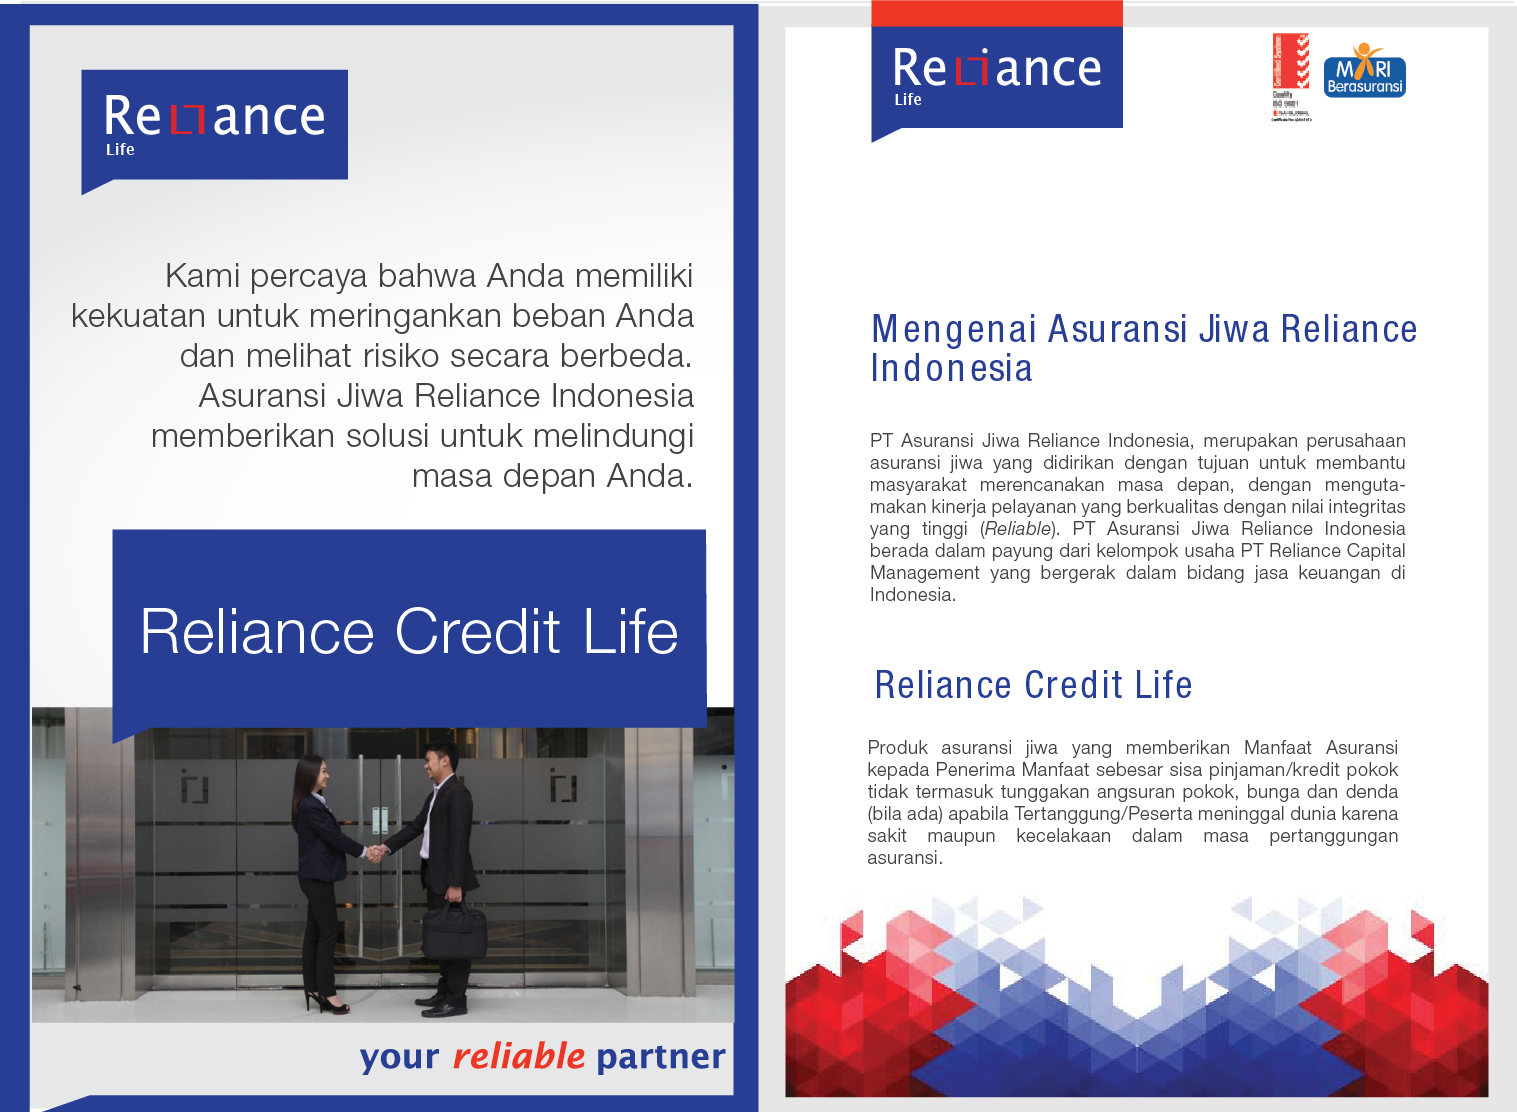 Reliance Credit Life